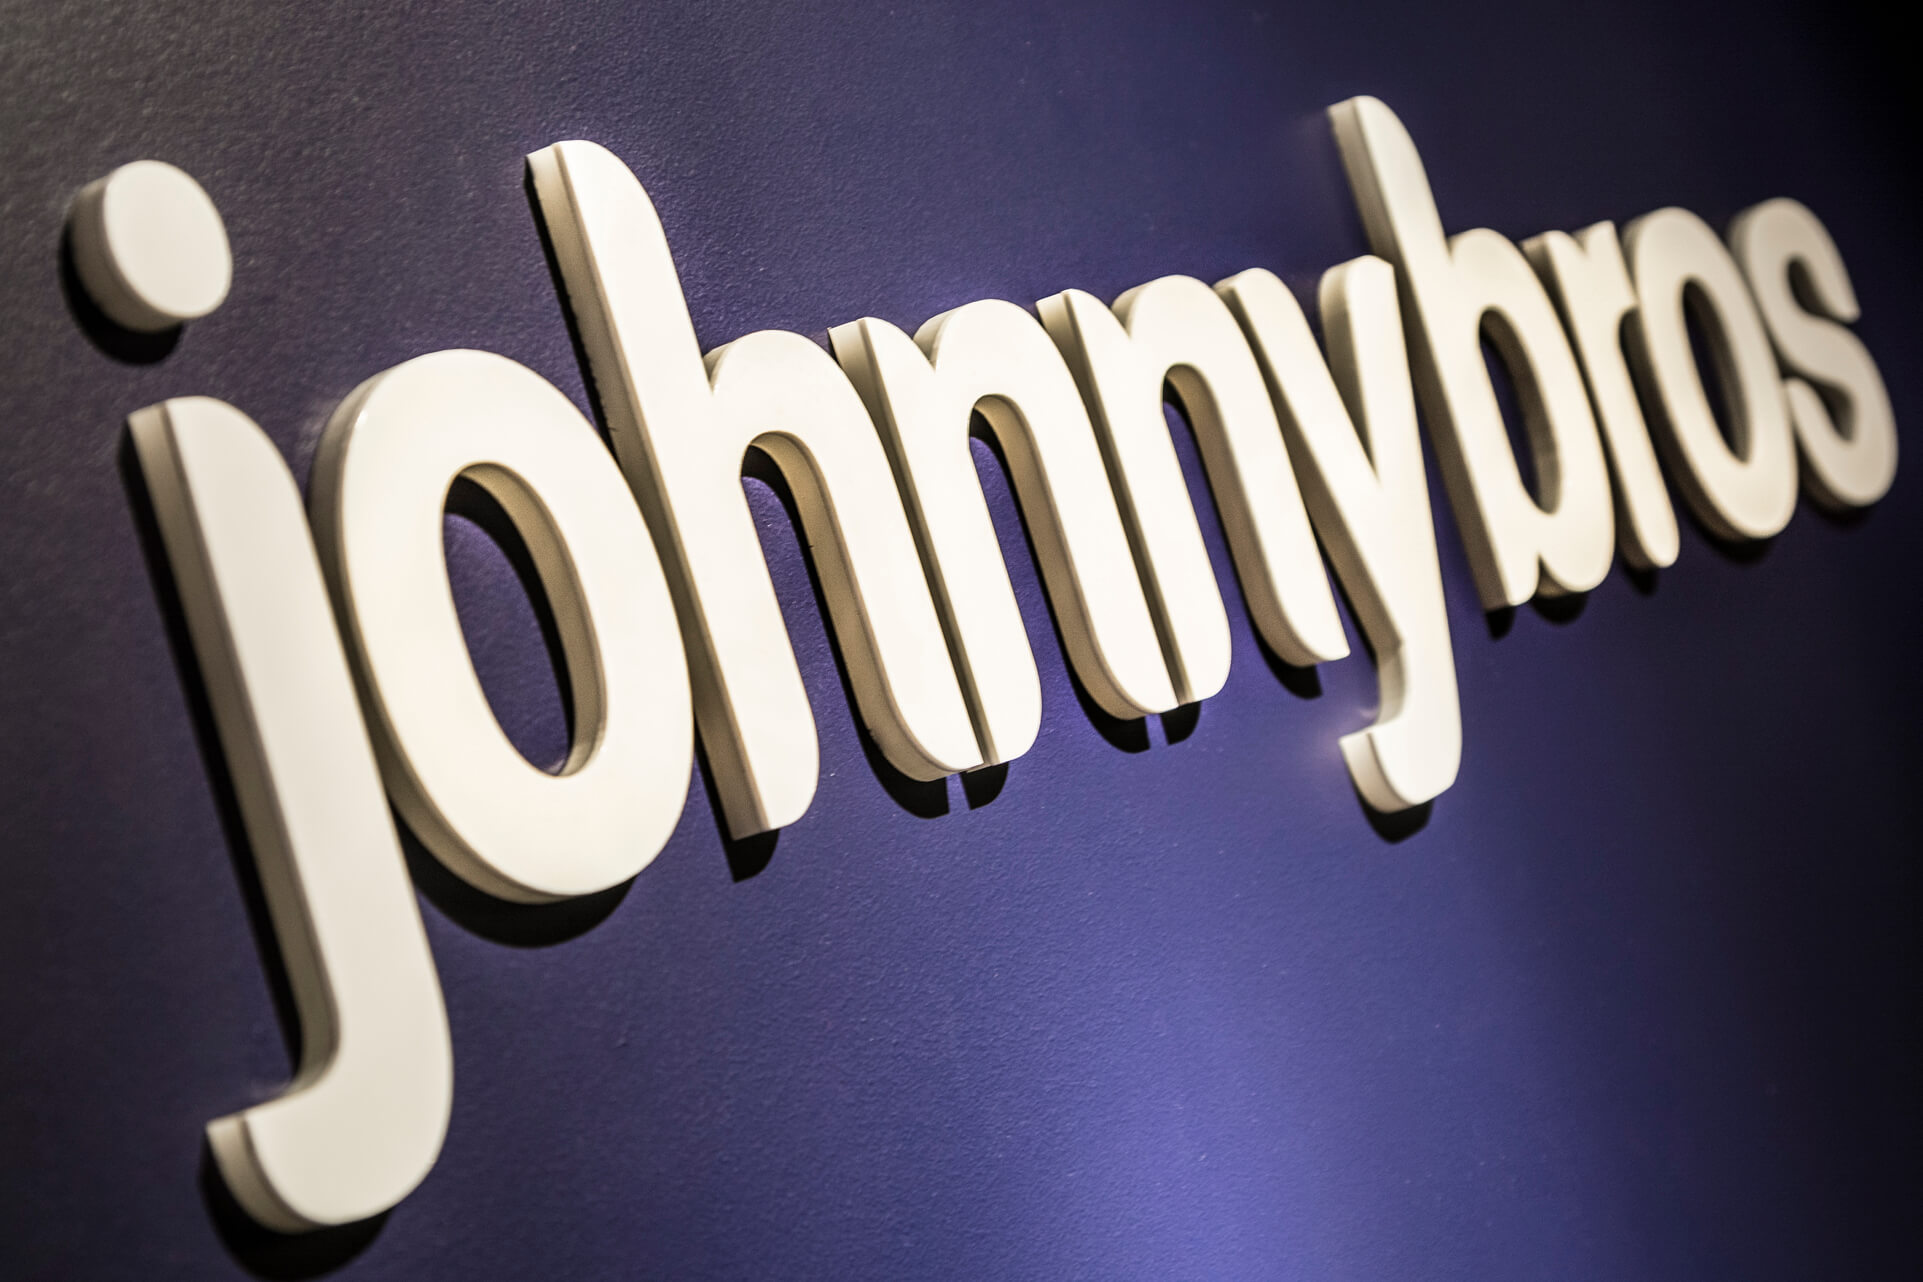 Johnnybros - Johnybros - Lettres 3D en acrylique découpées au laser